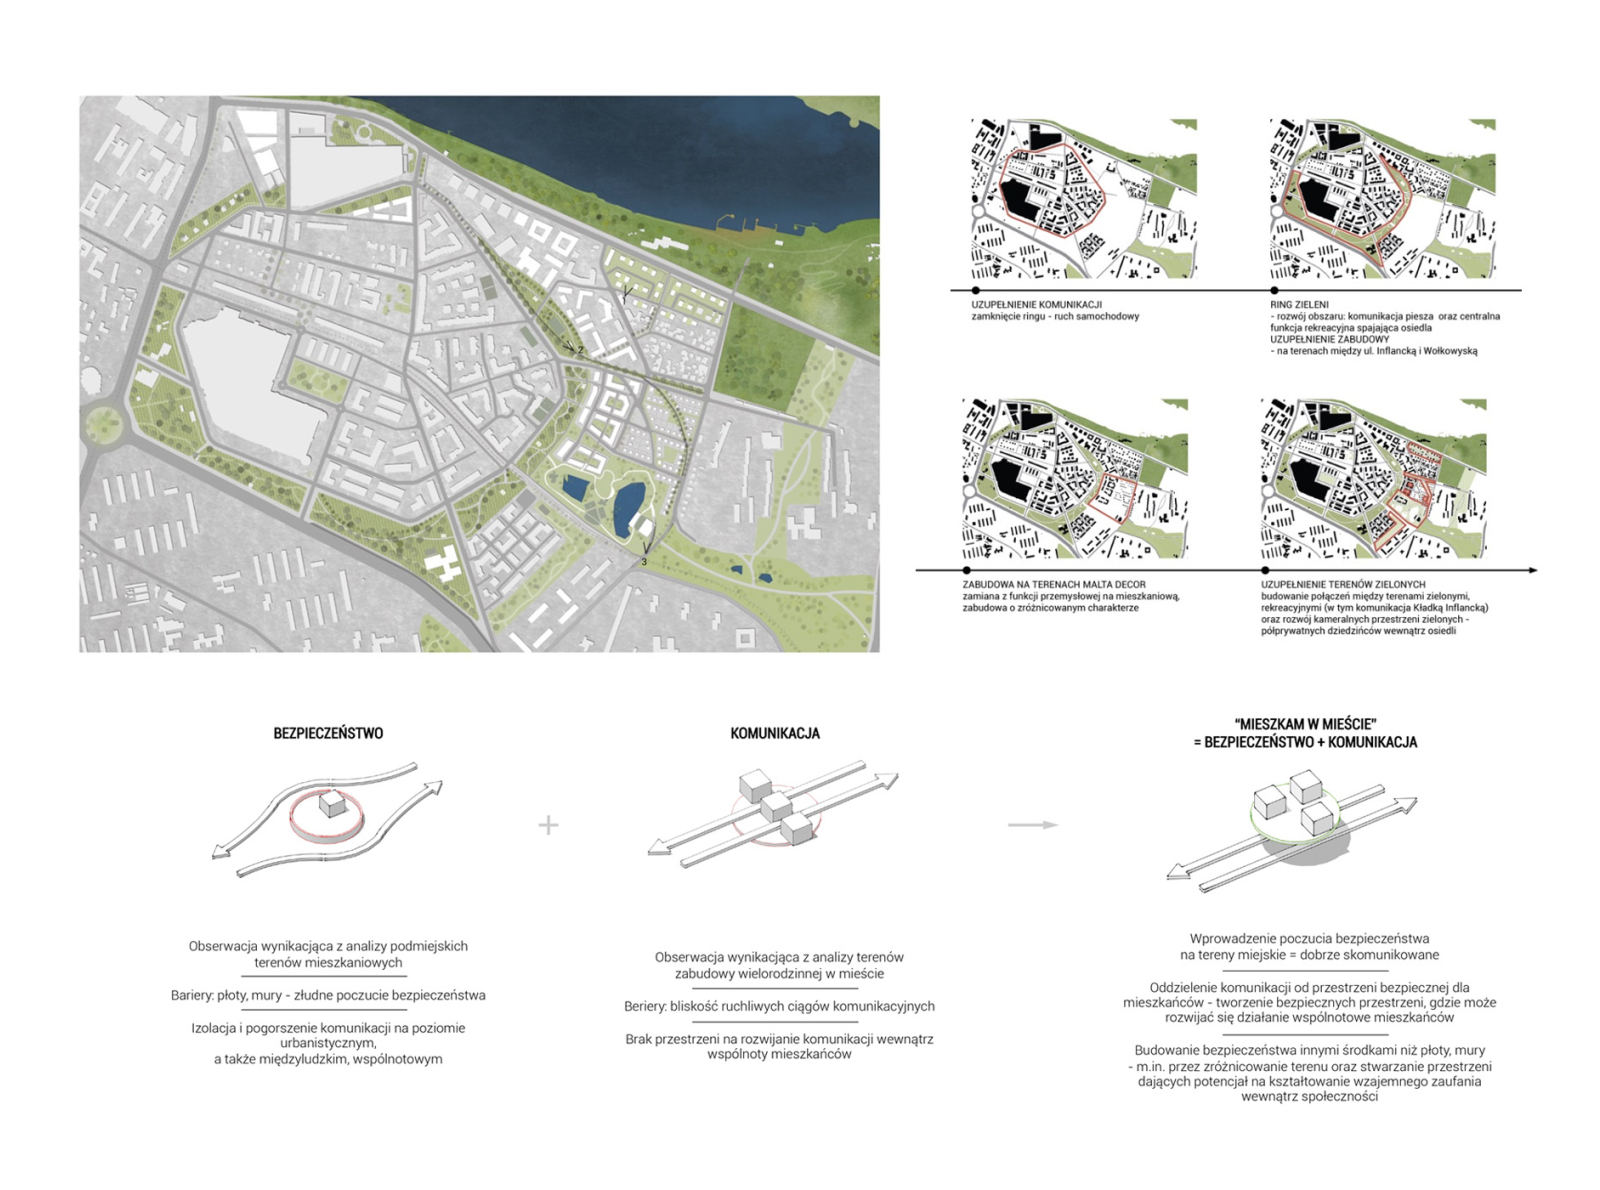 urban design project case study